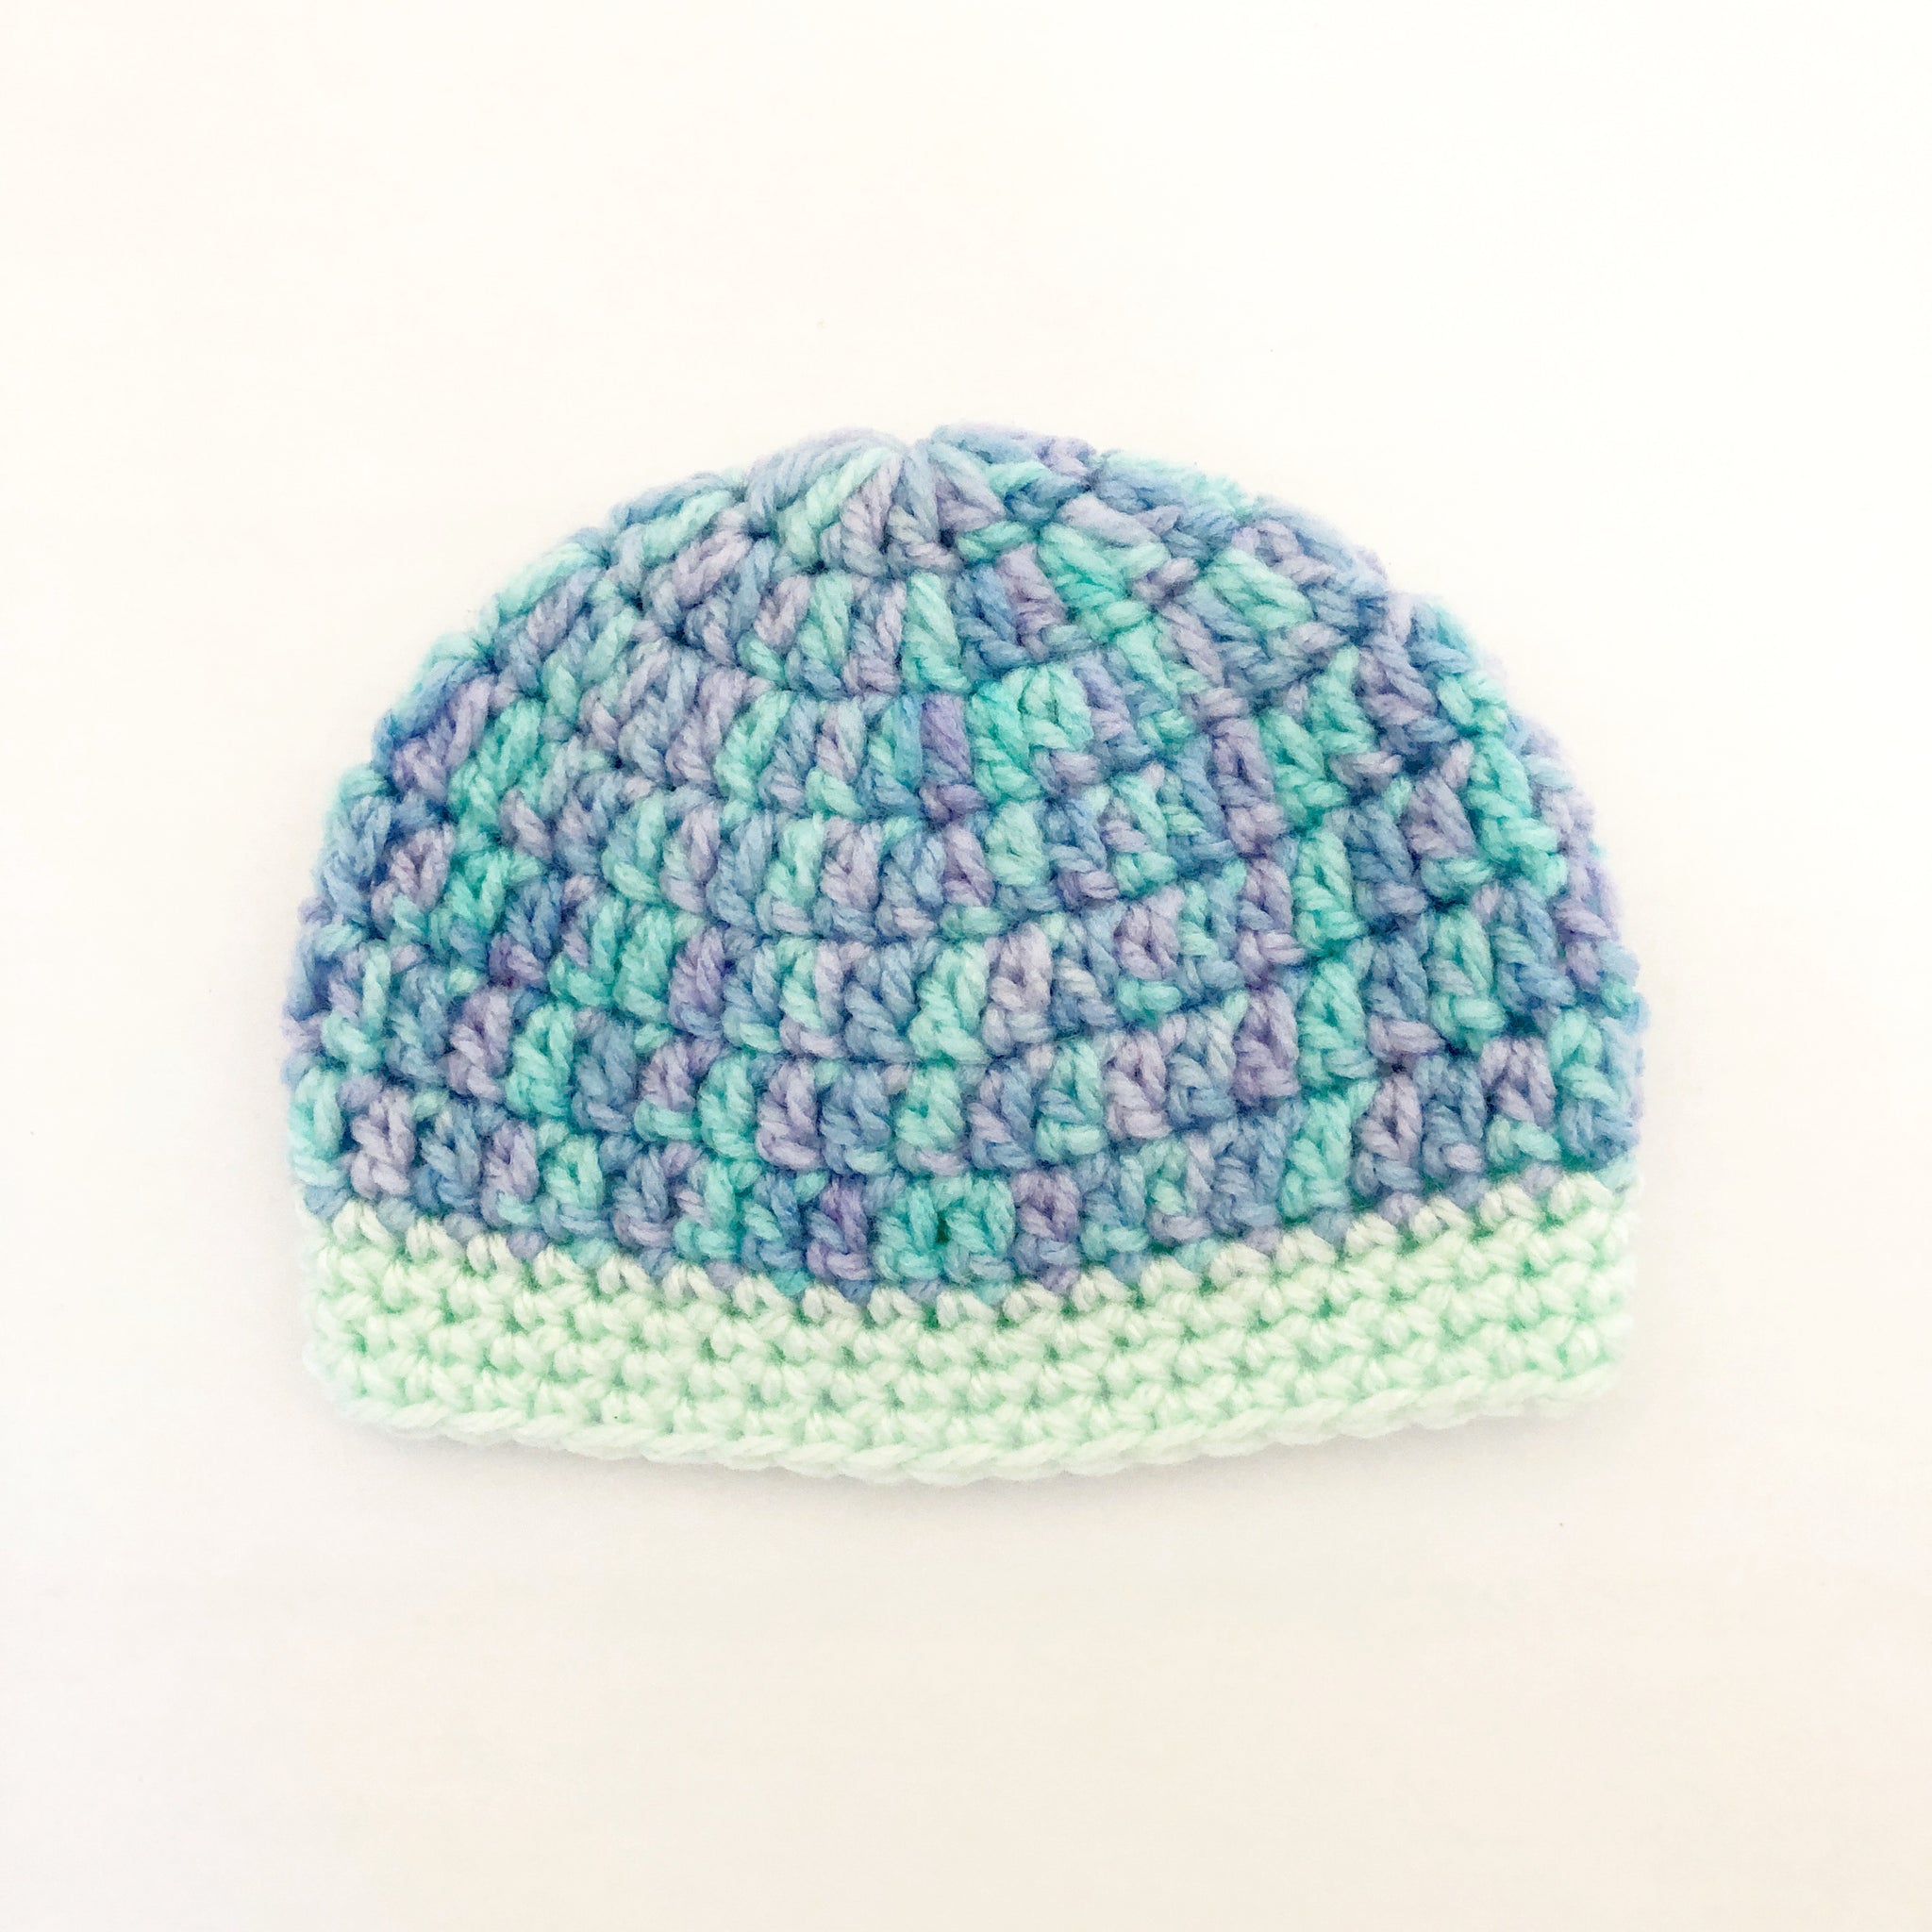 Crochet wool beanie - mermaid blue and purple